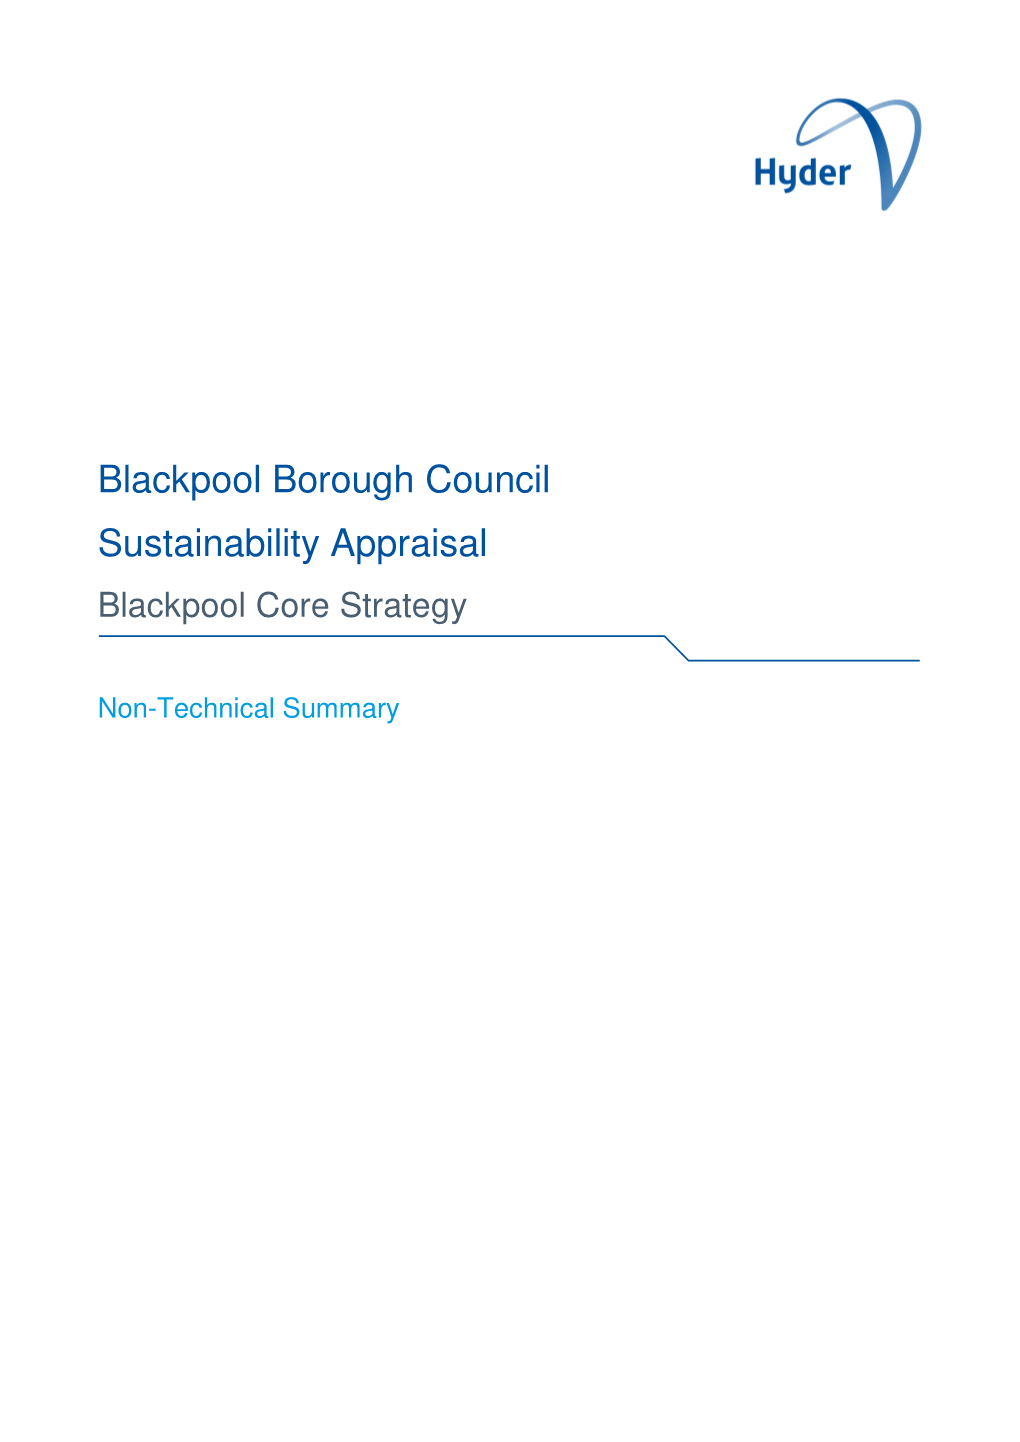 Blackpool Borough Council Sustainability Appraisal Blackpool Core Strategy